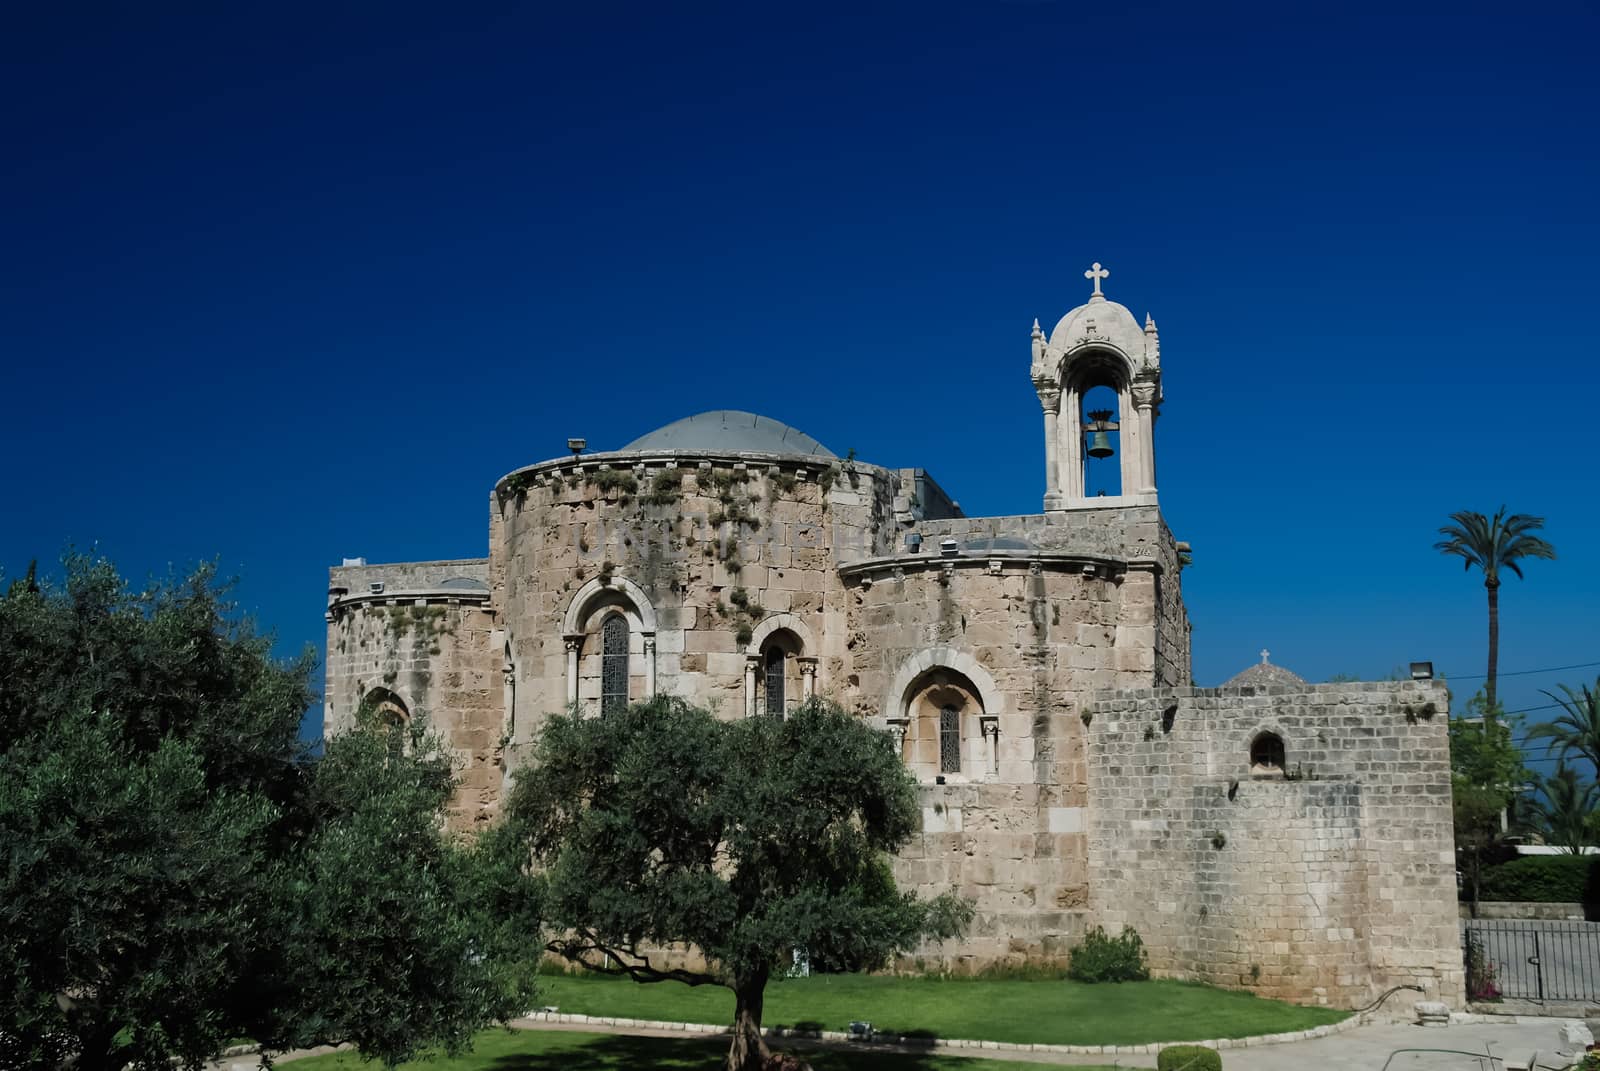 The Crusades-era Church of St. John-Mark in Byblos, Lebanon